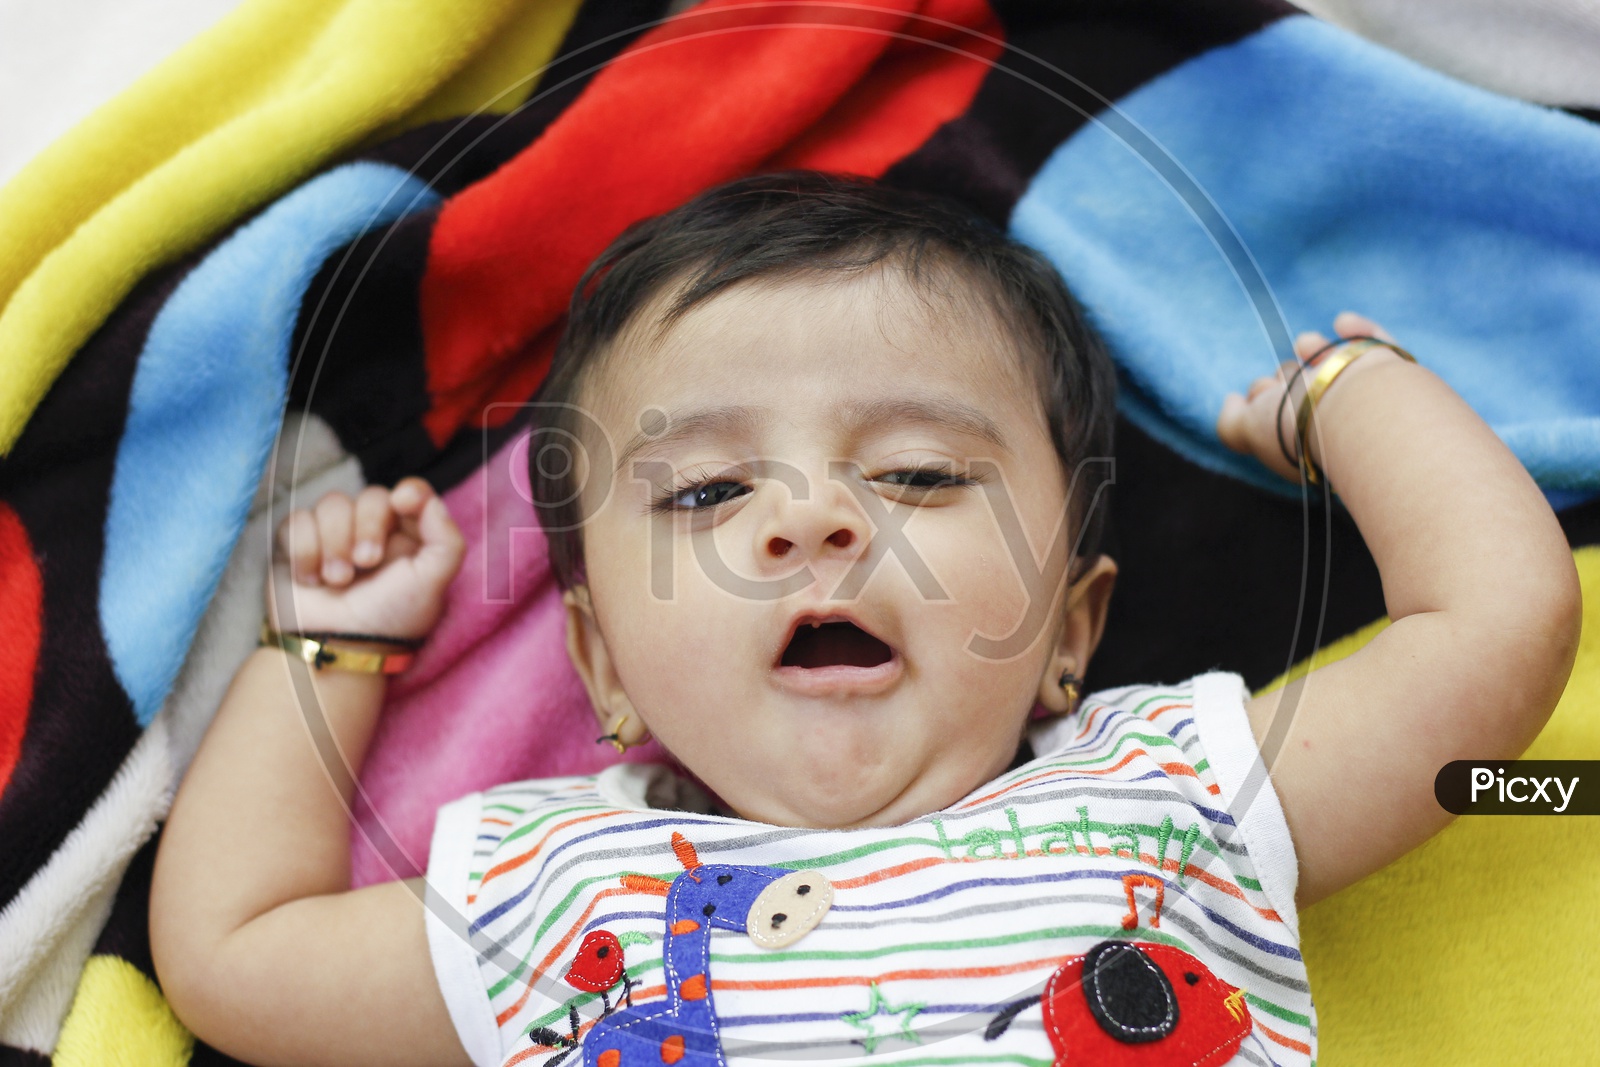 Indian Cute Baby Boy Feeling  Sleepy  and Yawning  Closeup Shot